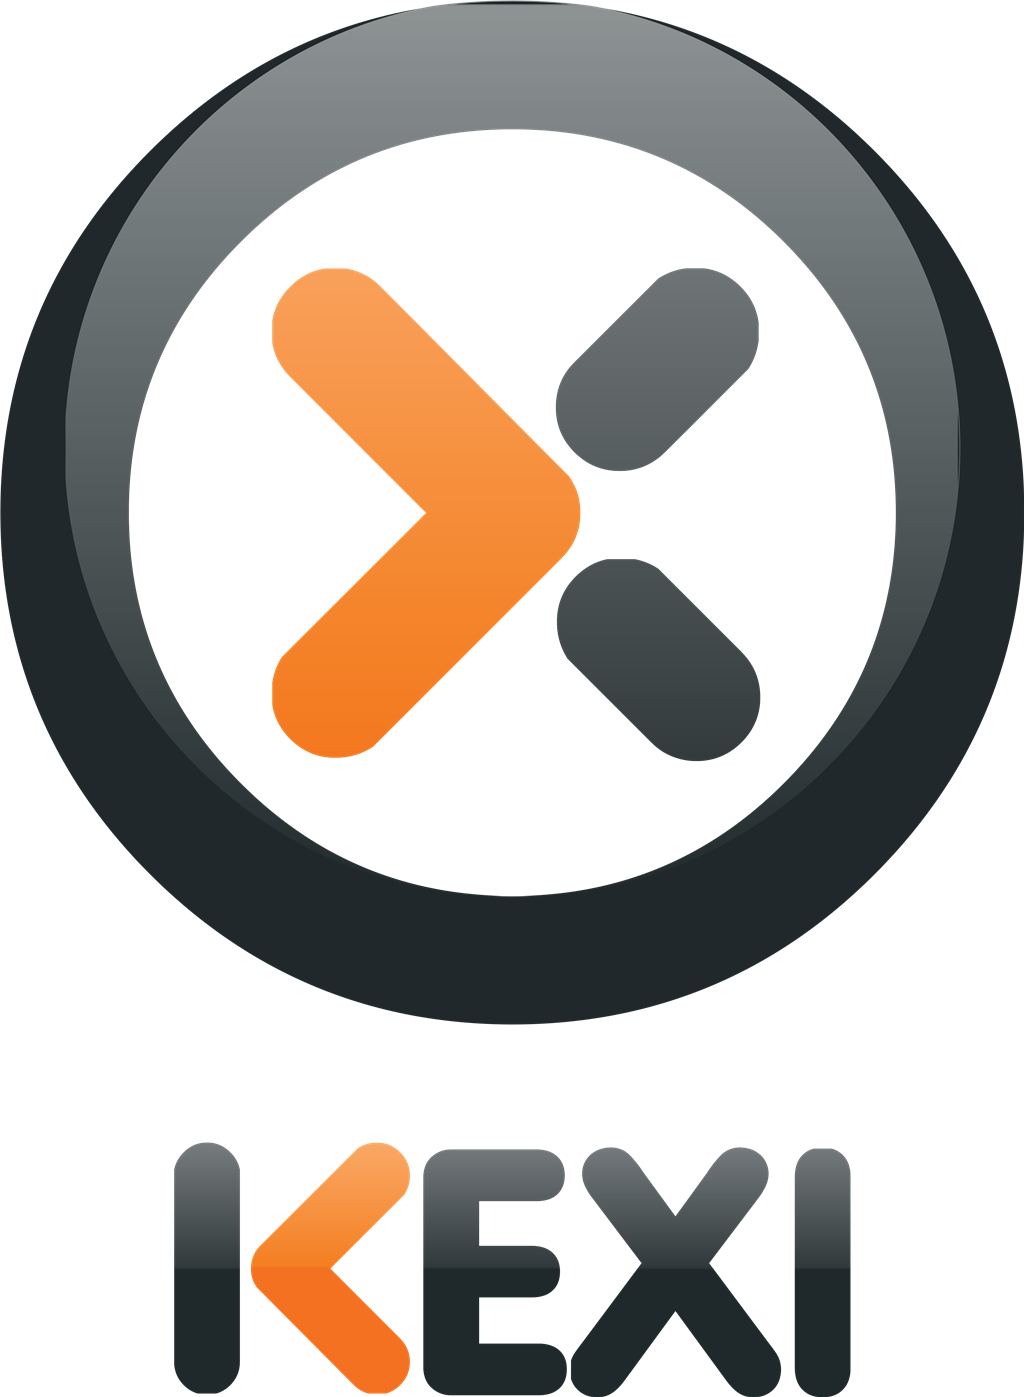 Kexi logotype, transparent .png, medium, large